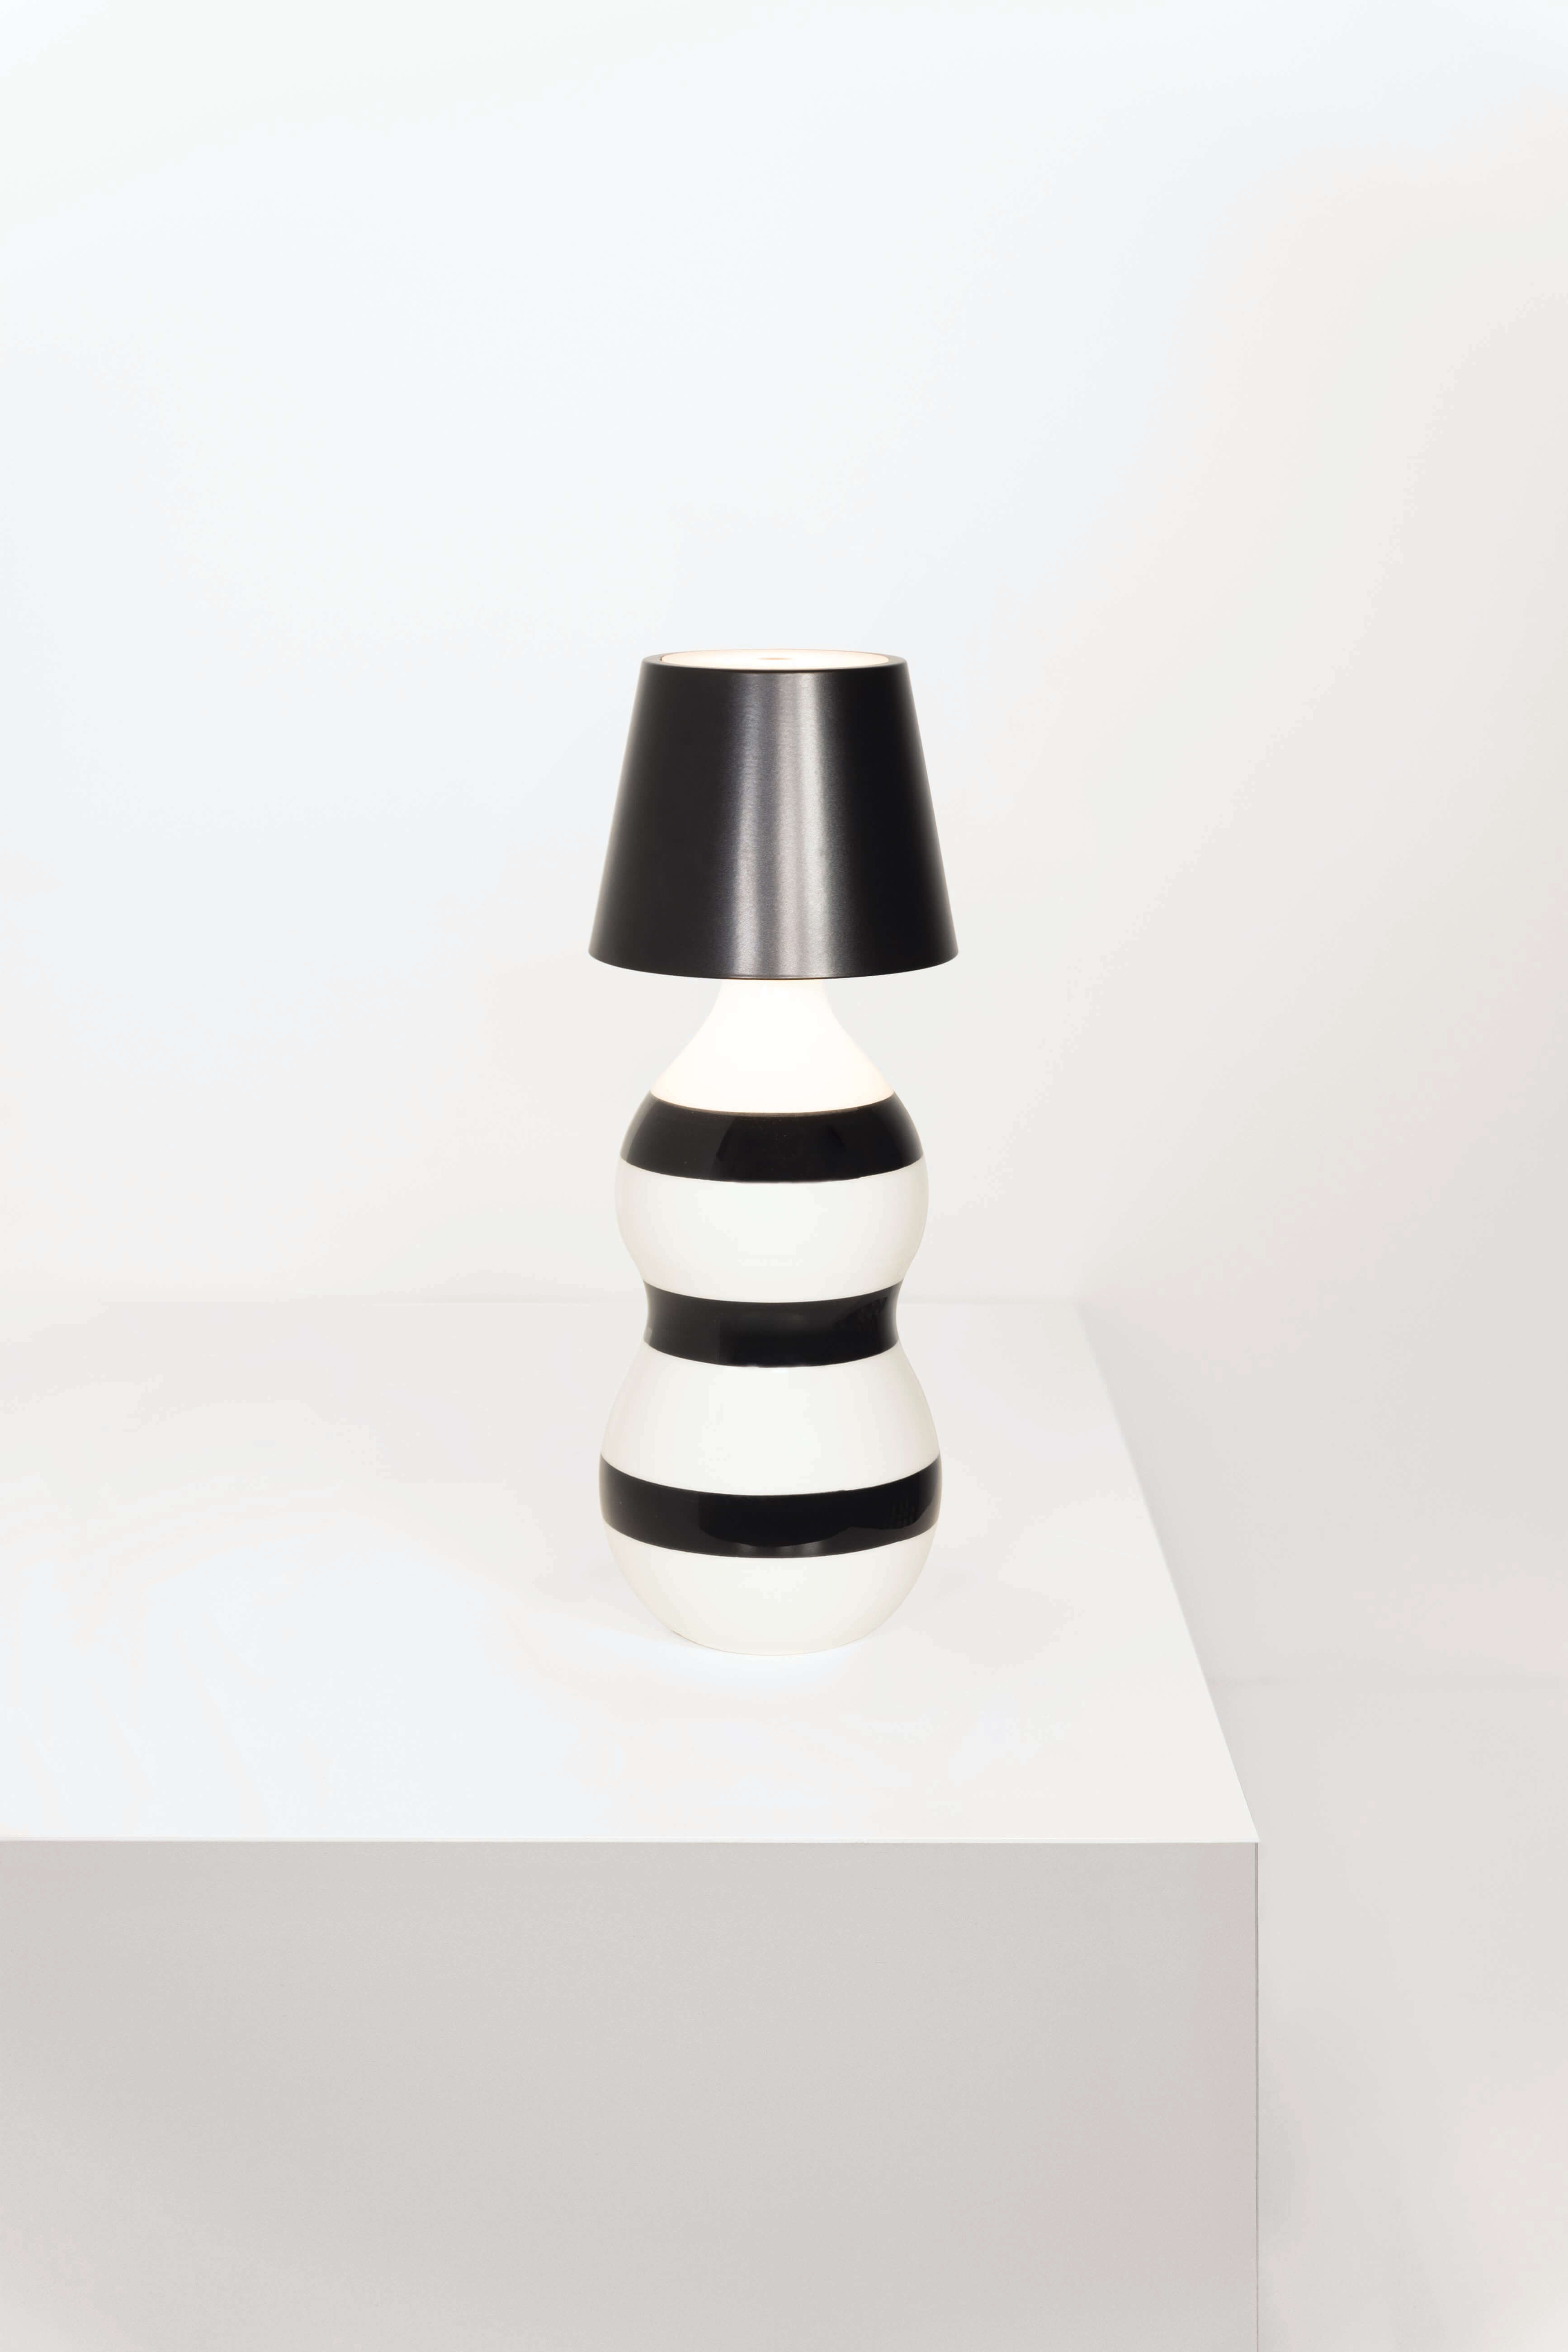 Zafferano Poldina Stopper Bianco / White + Lido Keramik Flasche mit horizontalen Ringen in schwarz